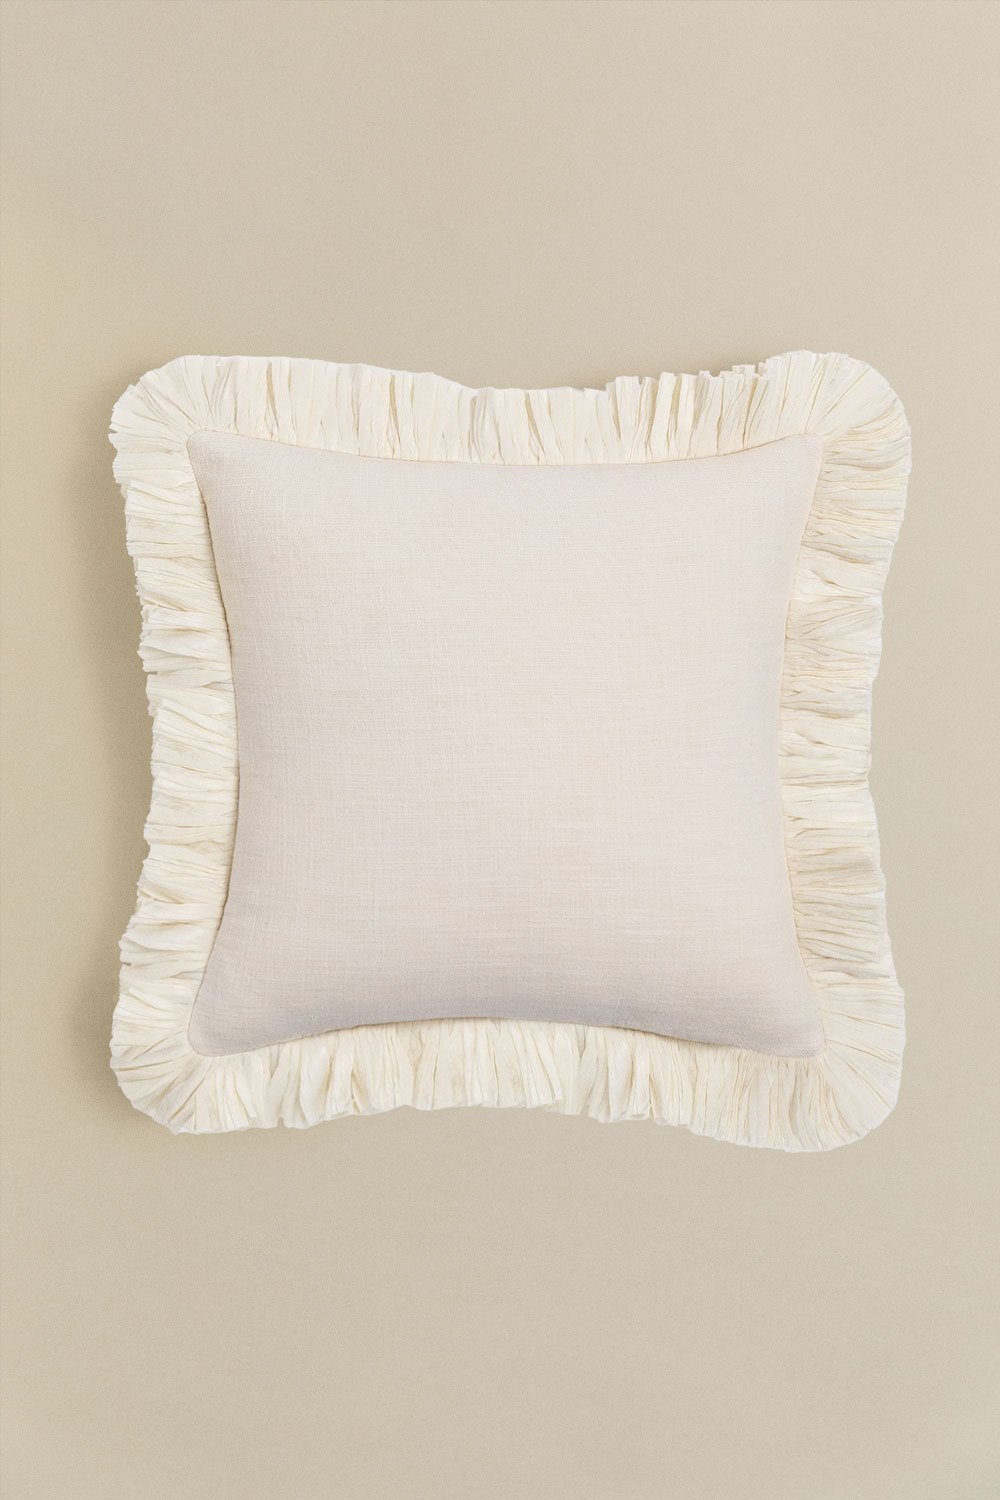  Square Cotton Cushion (40x40 cm) Zeiro, gallery image 1